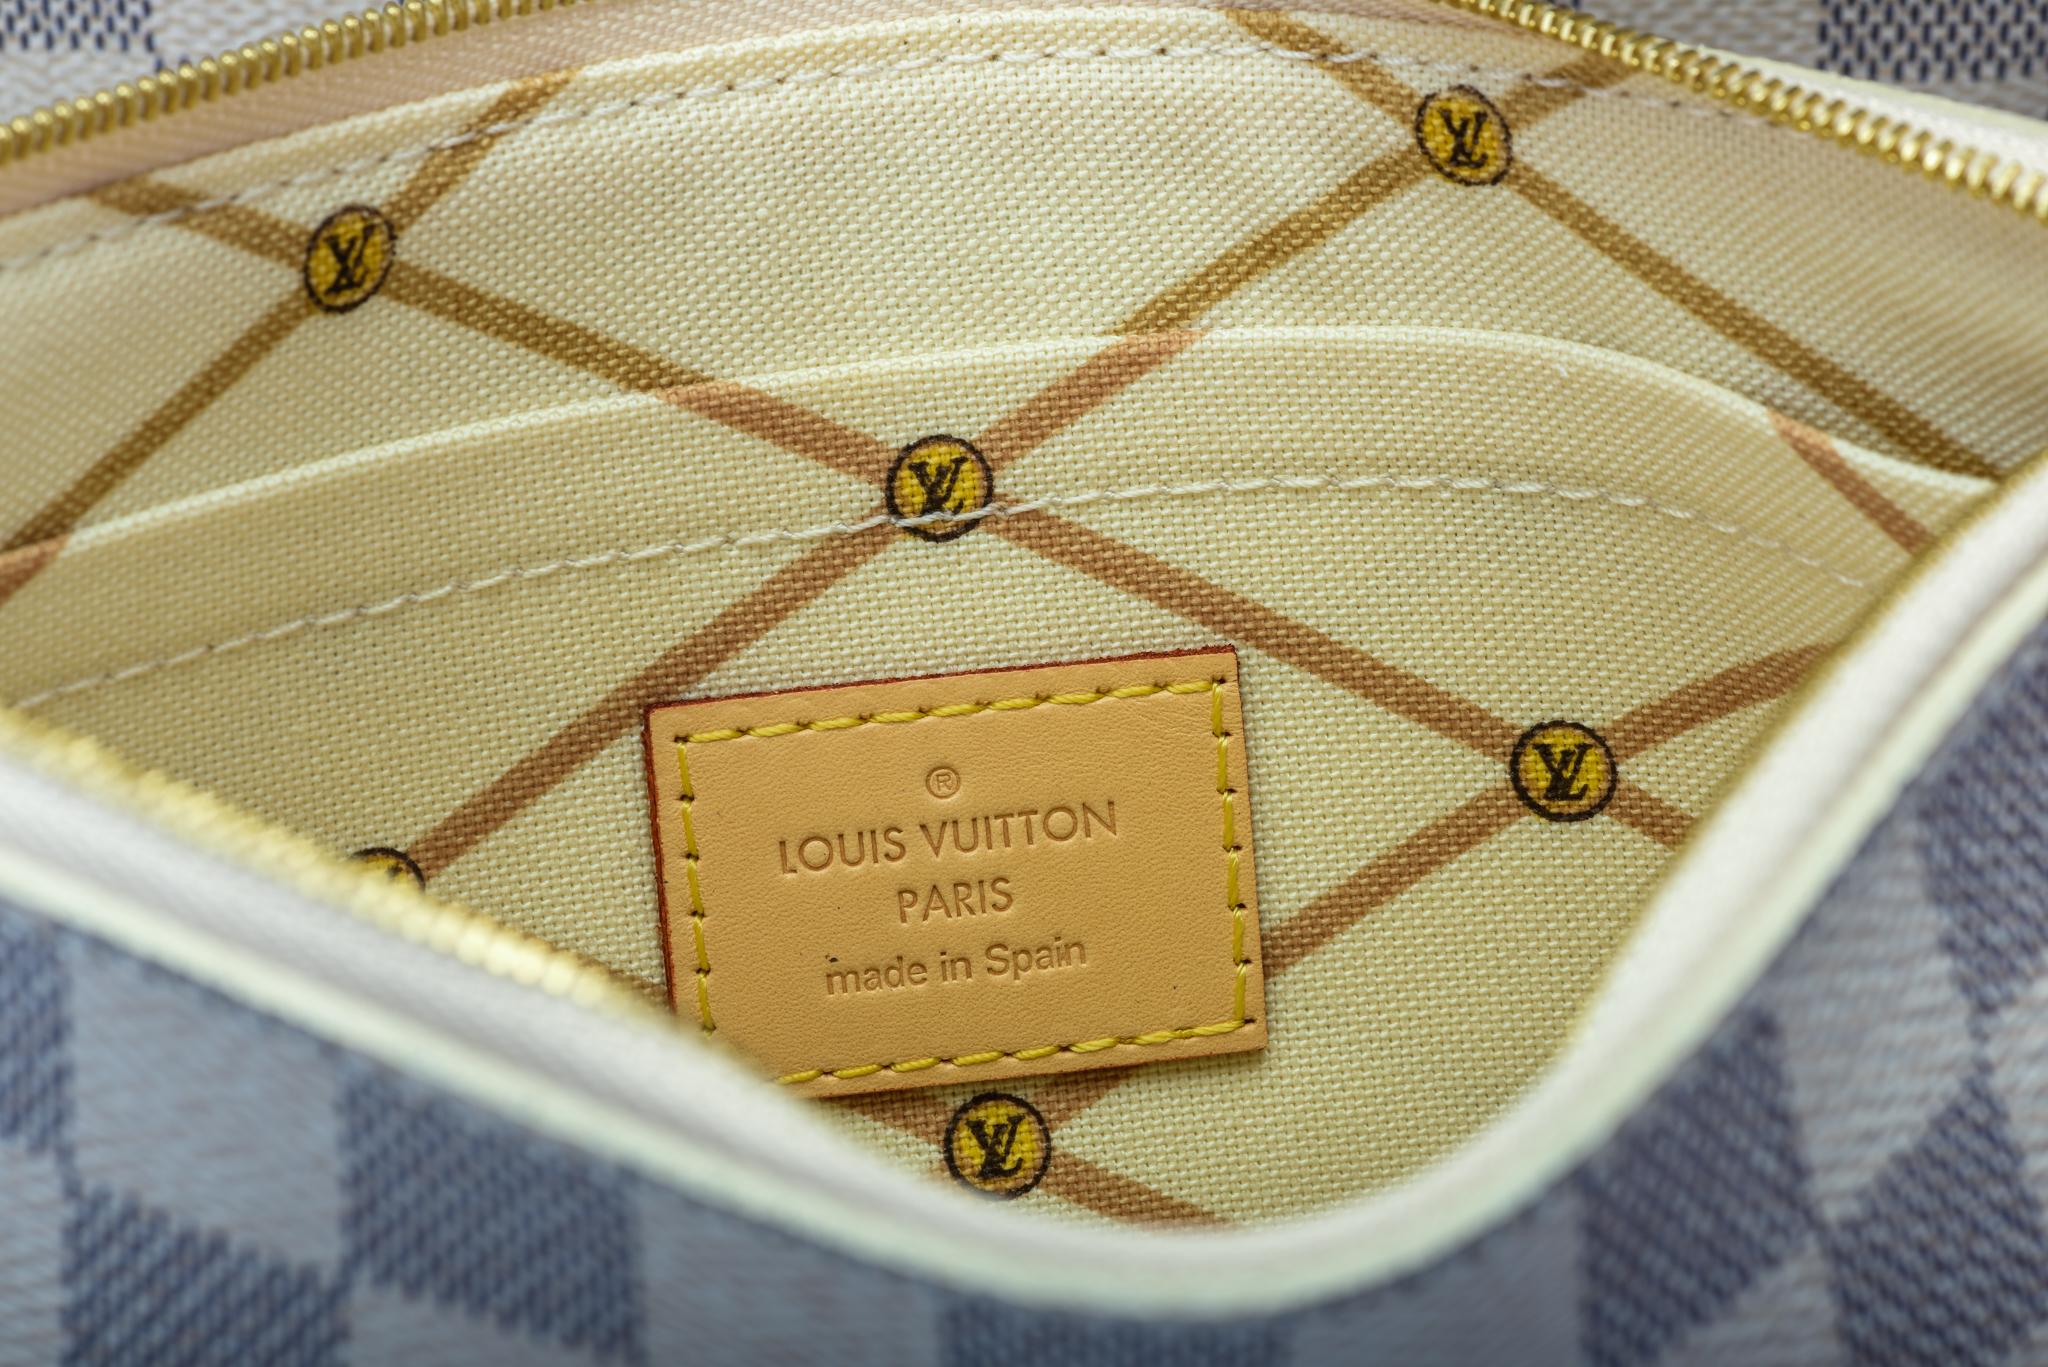 New in Box Louis Vuitton Limited Edition Capri Neverfull Damier Azur Bag 9